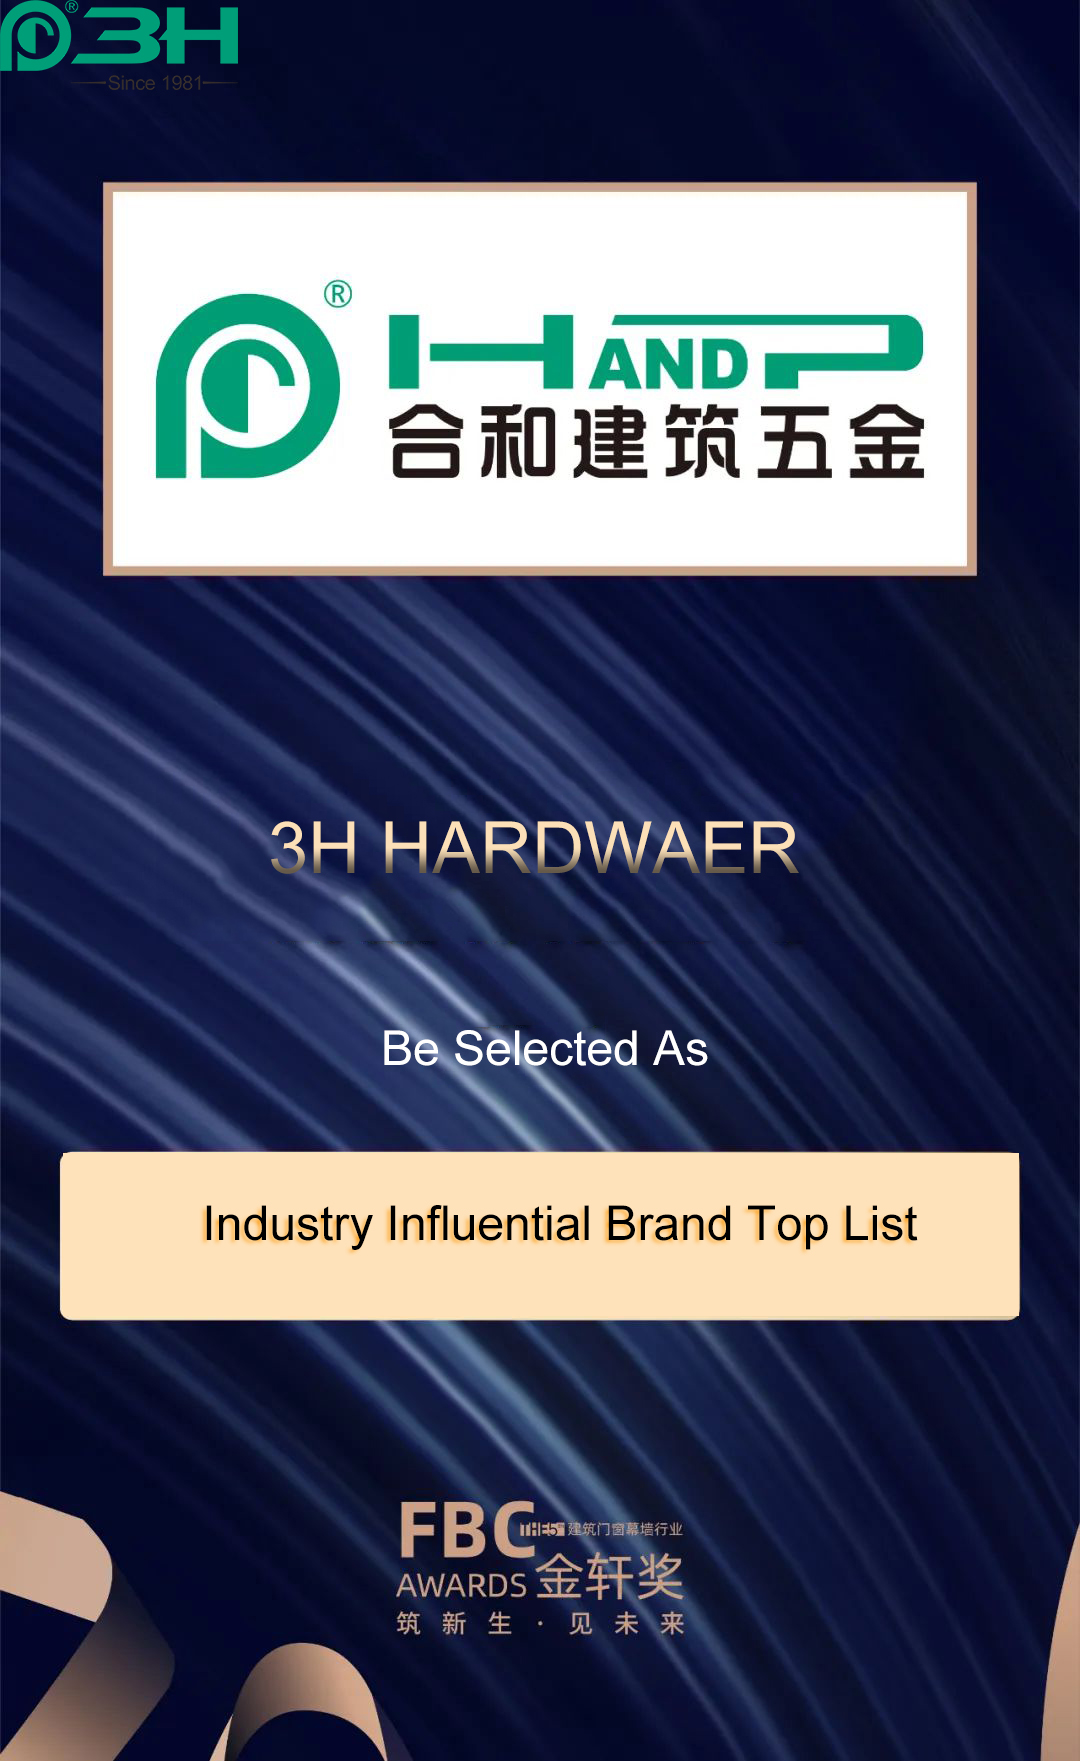 3h-hardware-won-three-honors-of-fbc-award 2